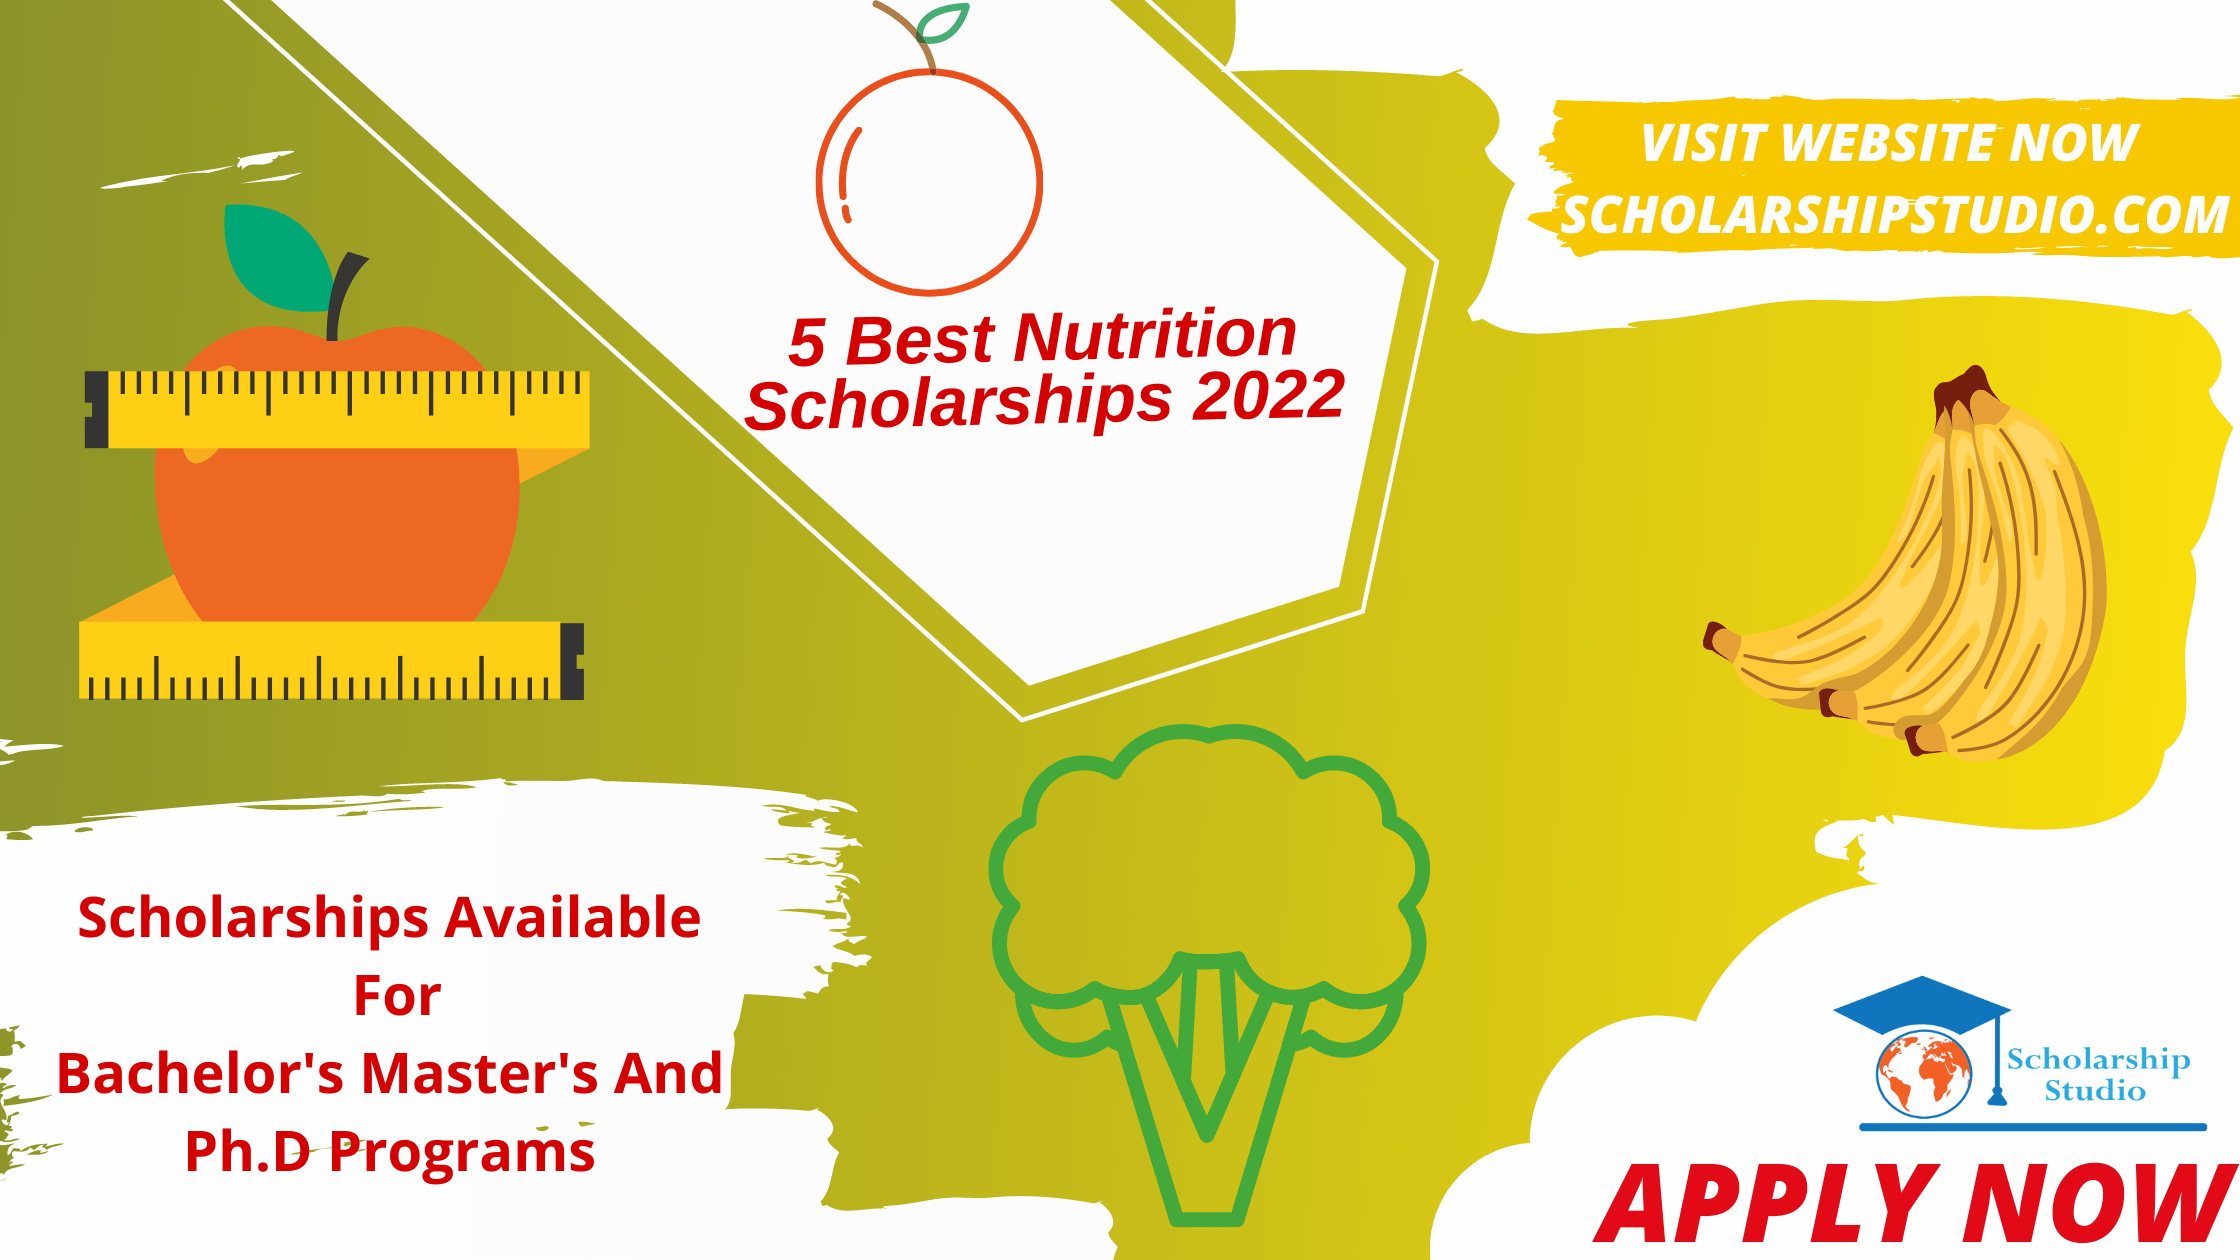 phd scholarships nutrition